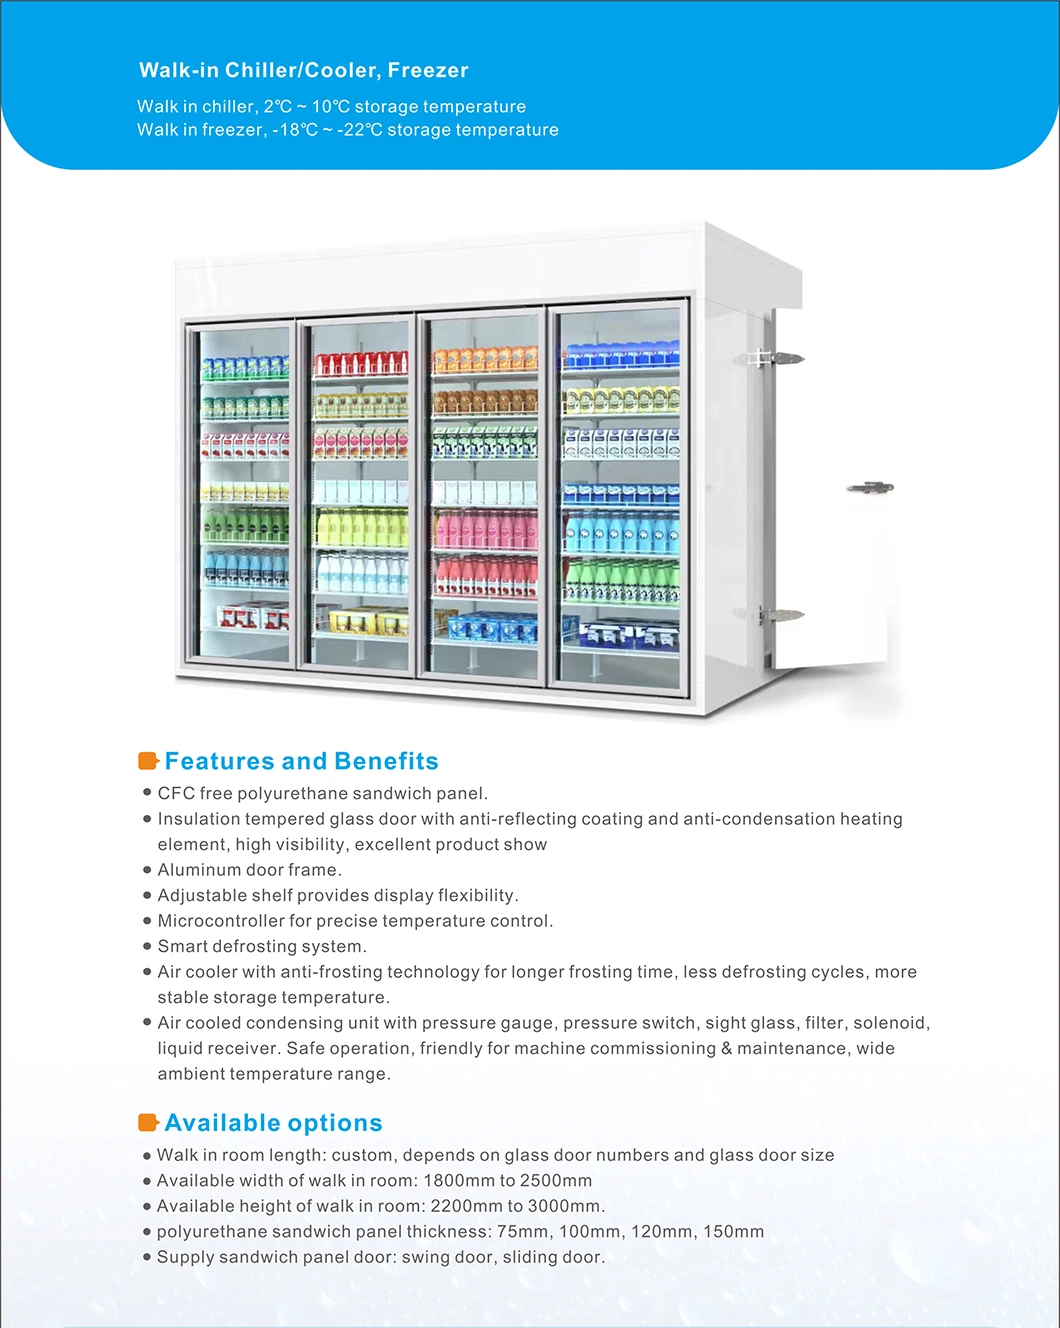 2-4m Supermarket Multi-Deck Showcase Fruit Vegetable Display Refrigerator Cabinet with Outdoor Condensing Compressor Unit